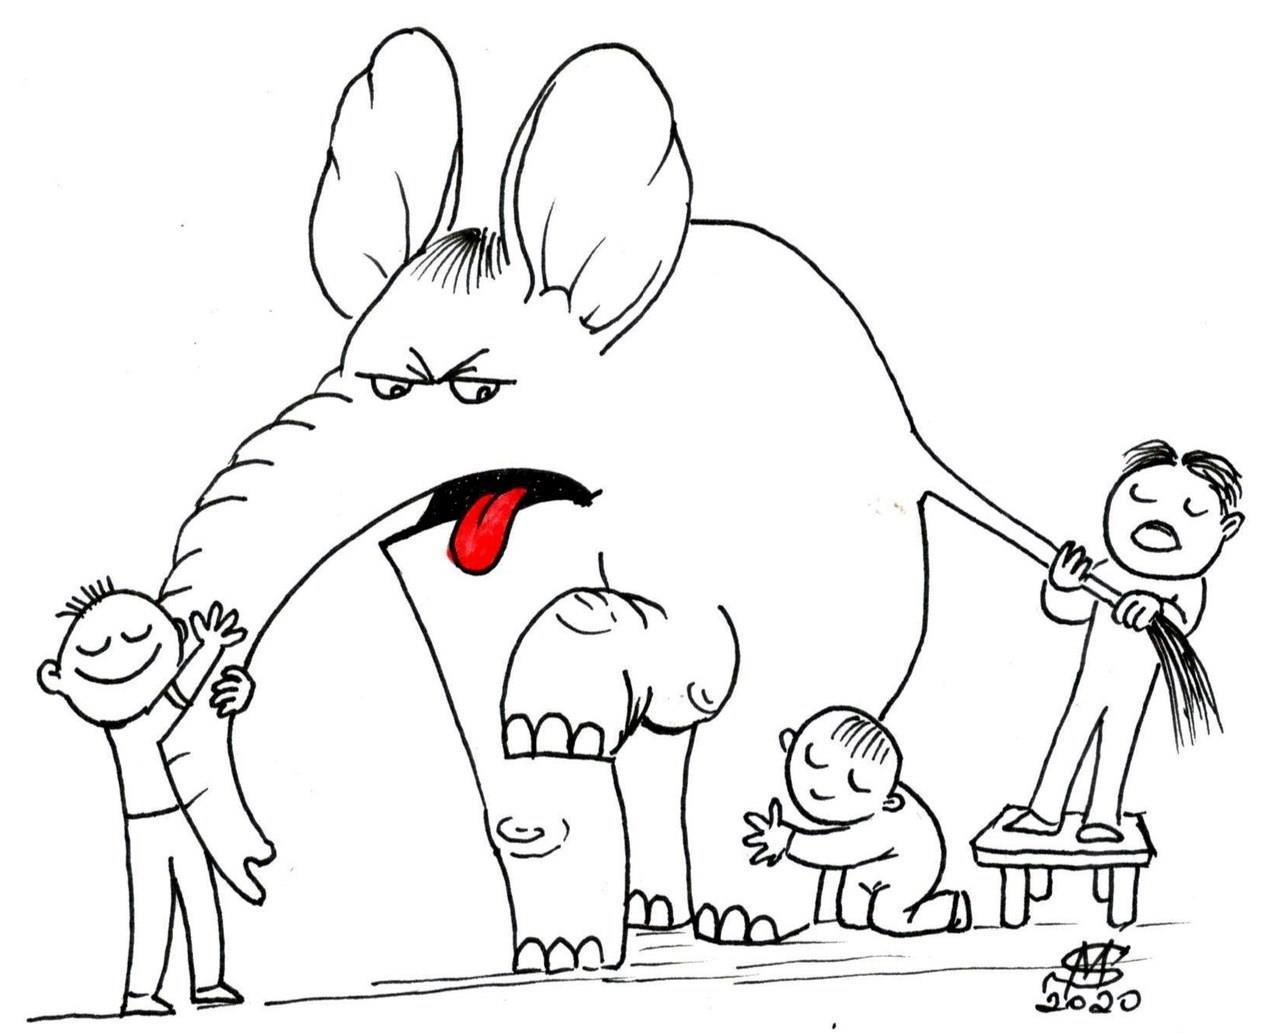 Рисунок к басне Крылова слон и моська карандашом